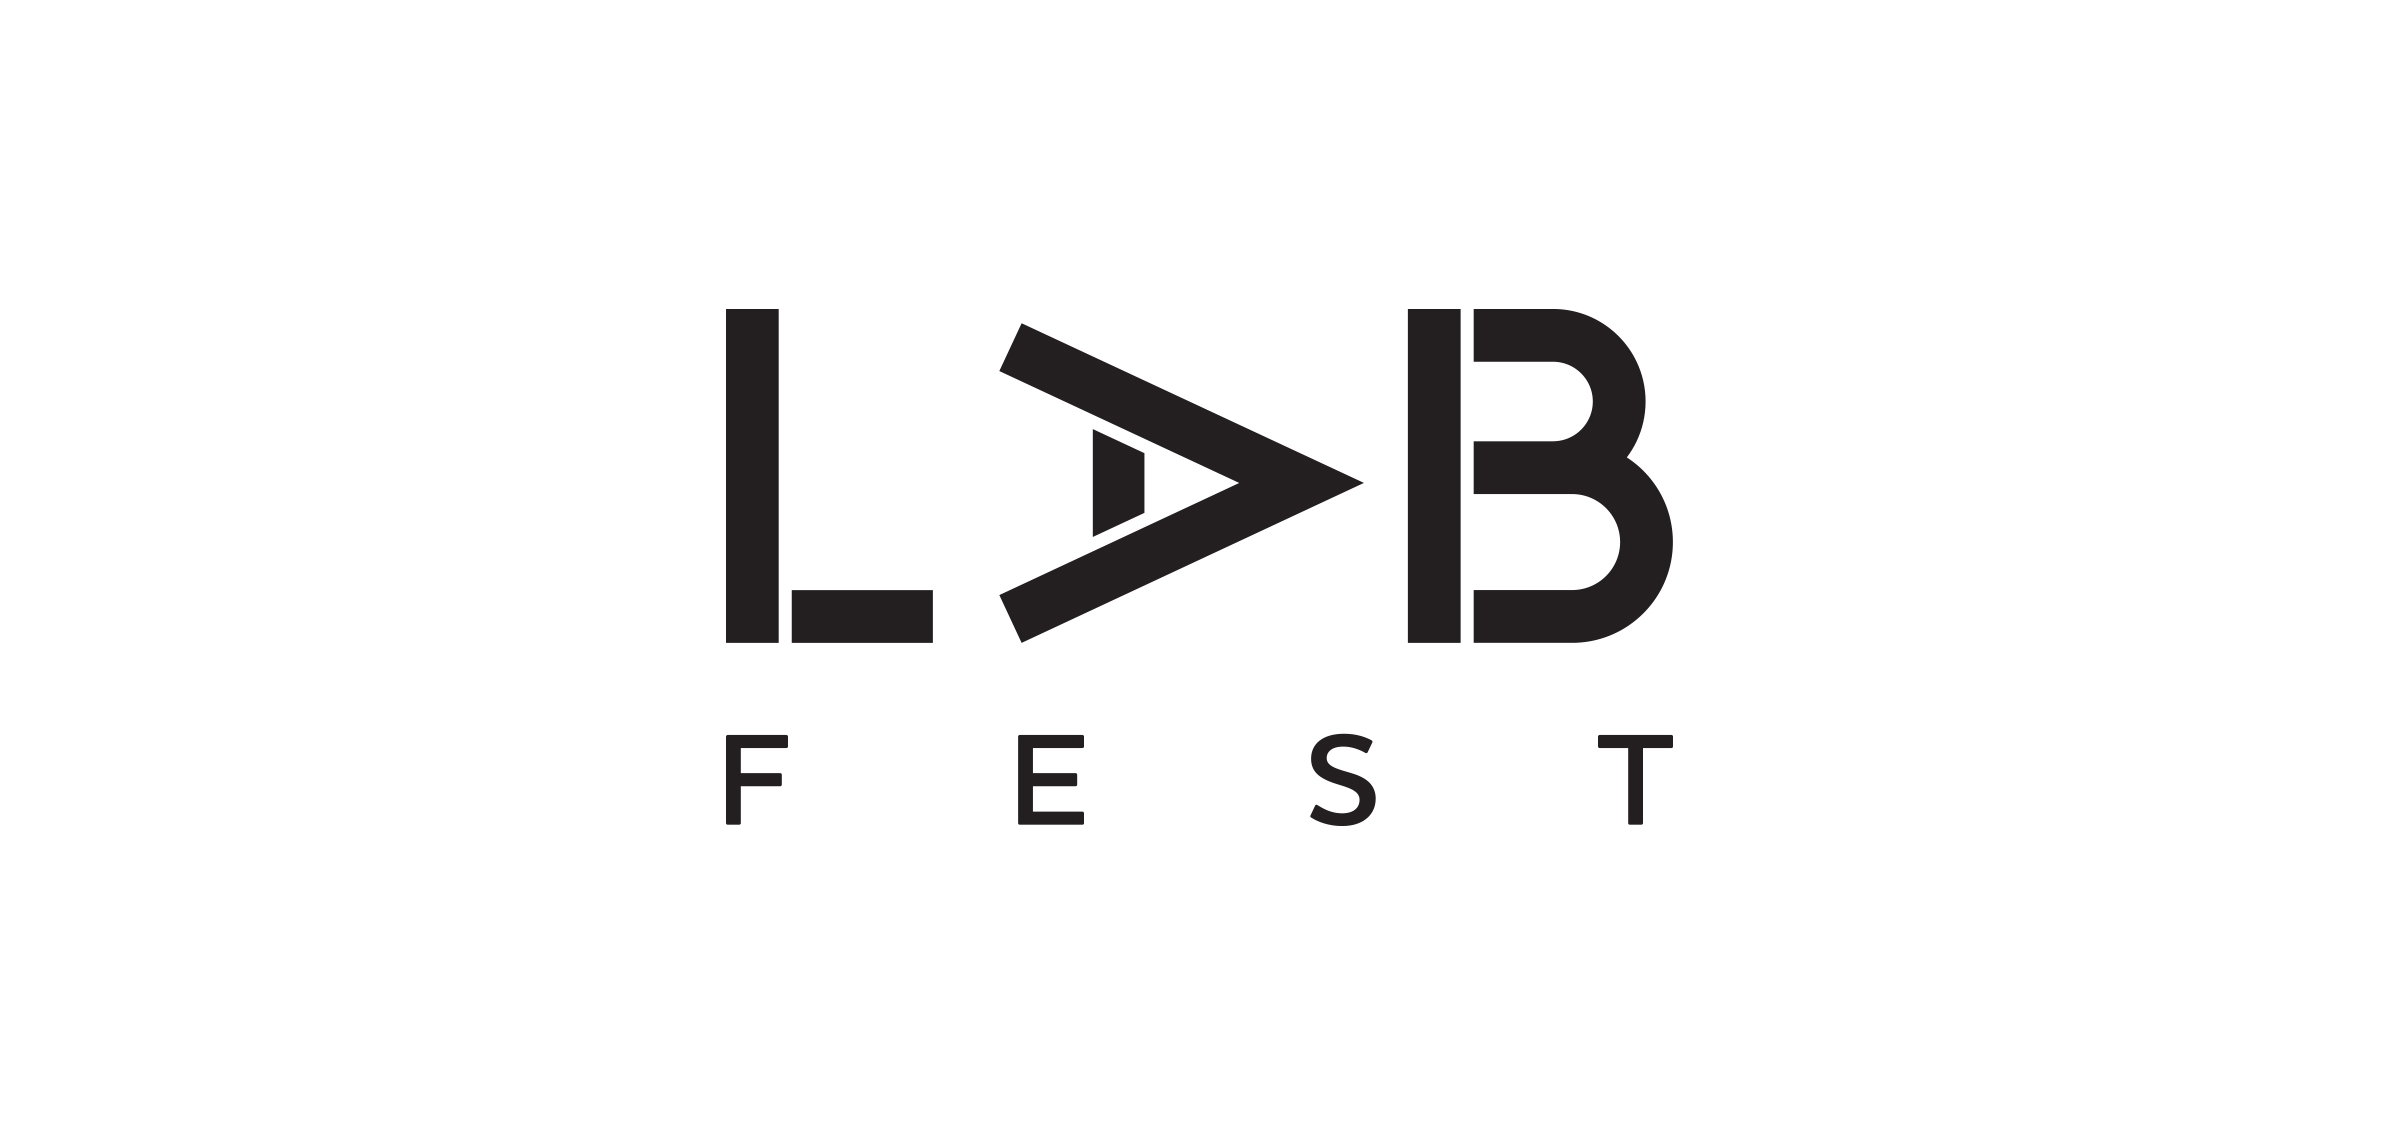 Lab Fest